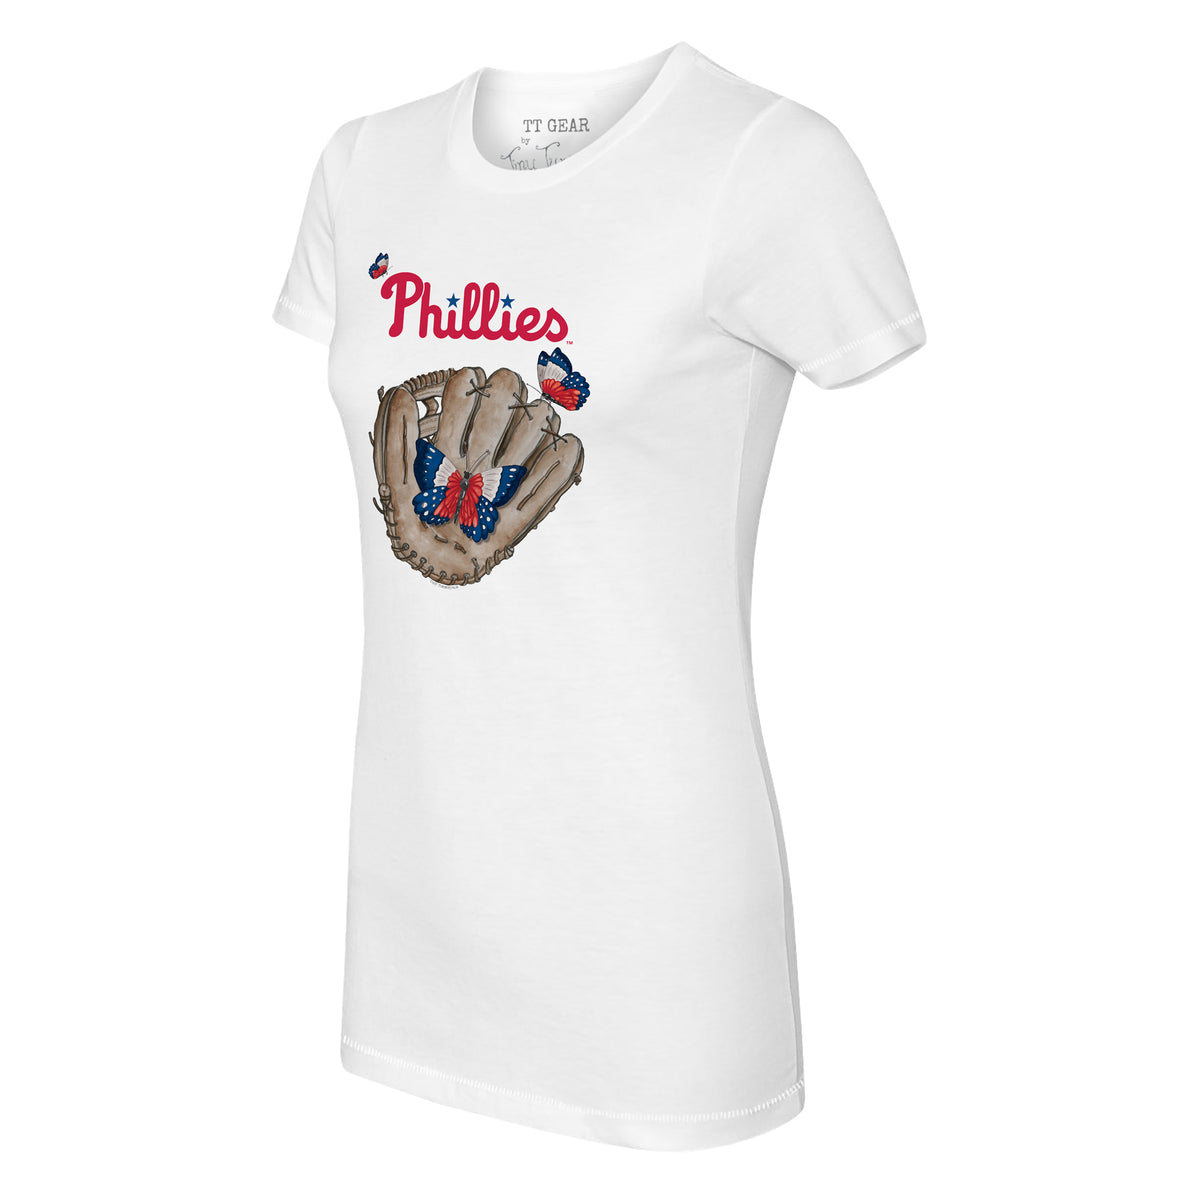 Philadelphia Phillies Butterfly Glove Tee Shirt